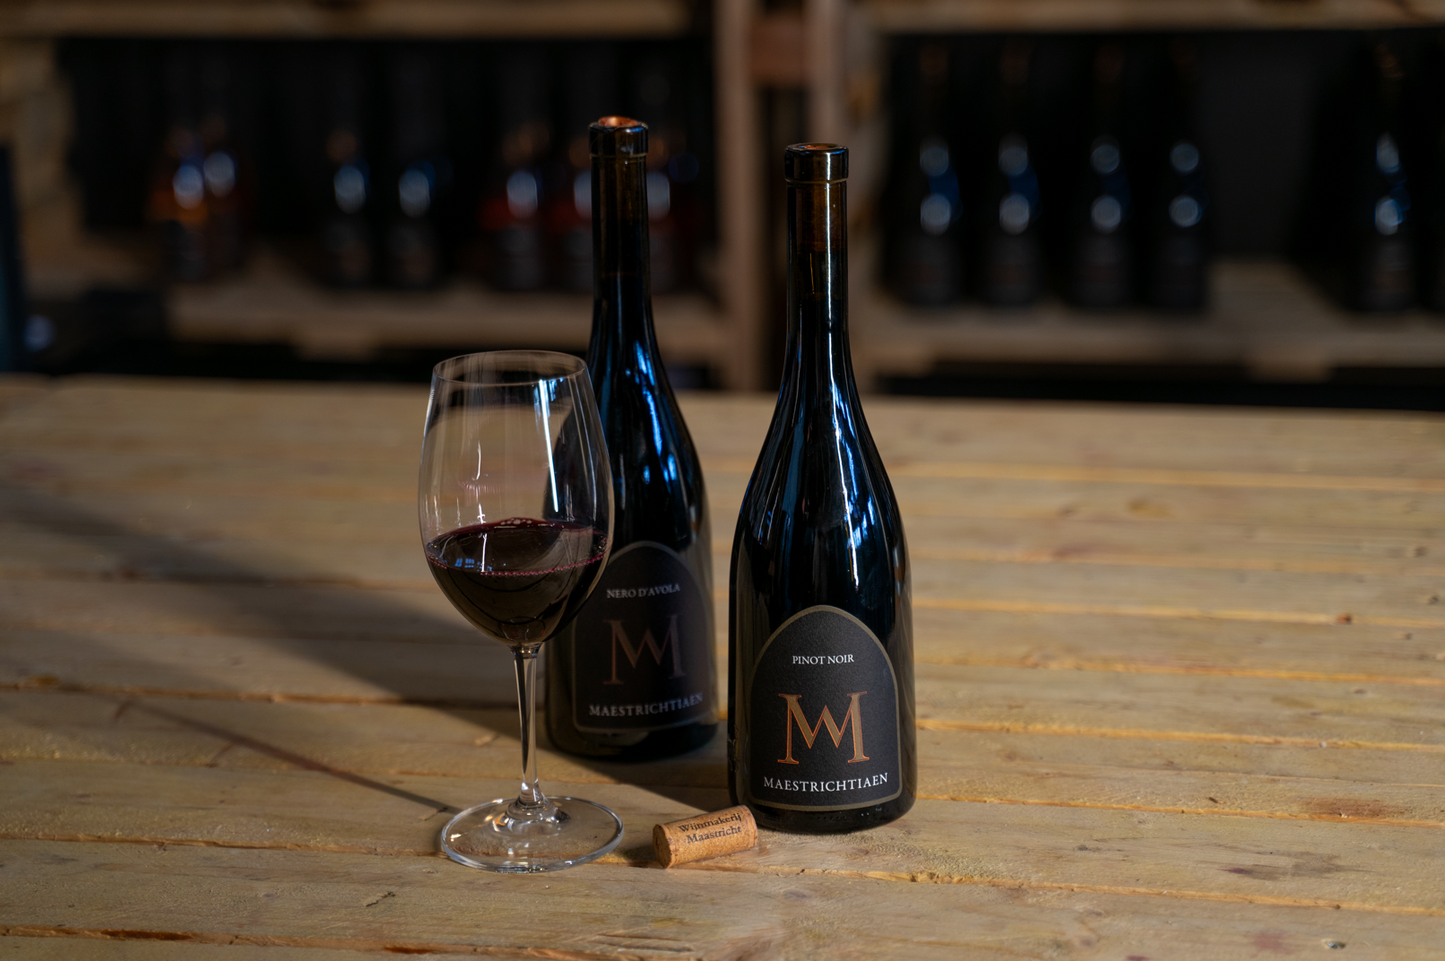 Maestrichtiaen Pinot Noir 2019